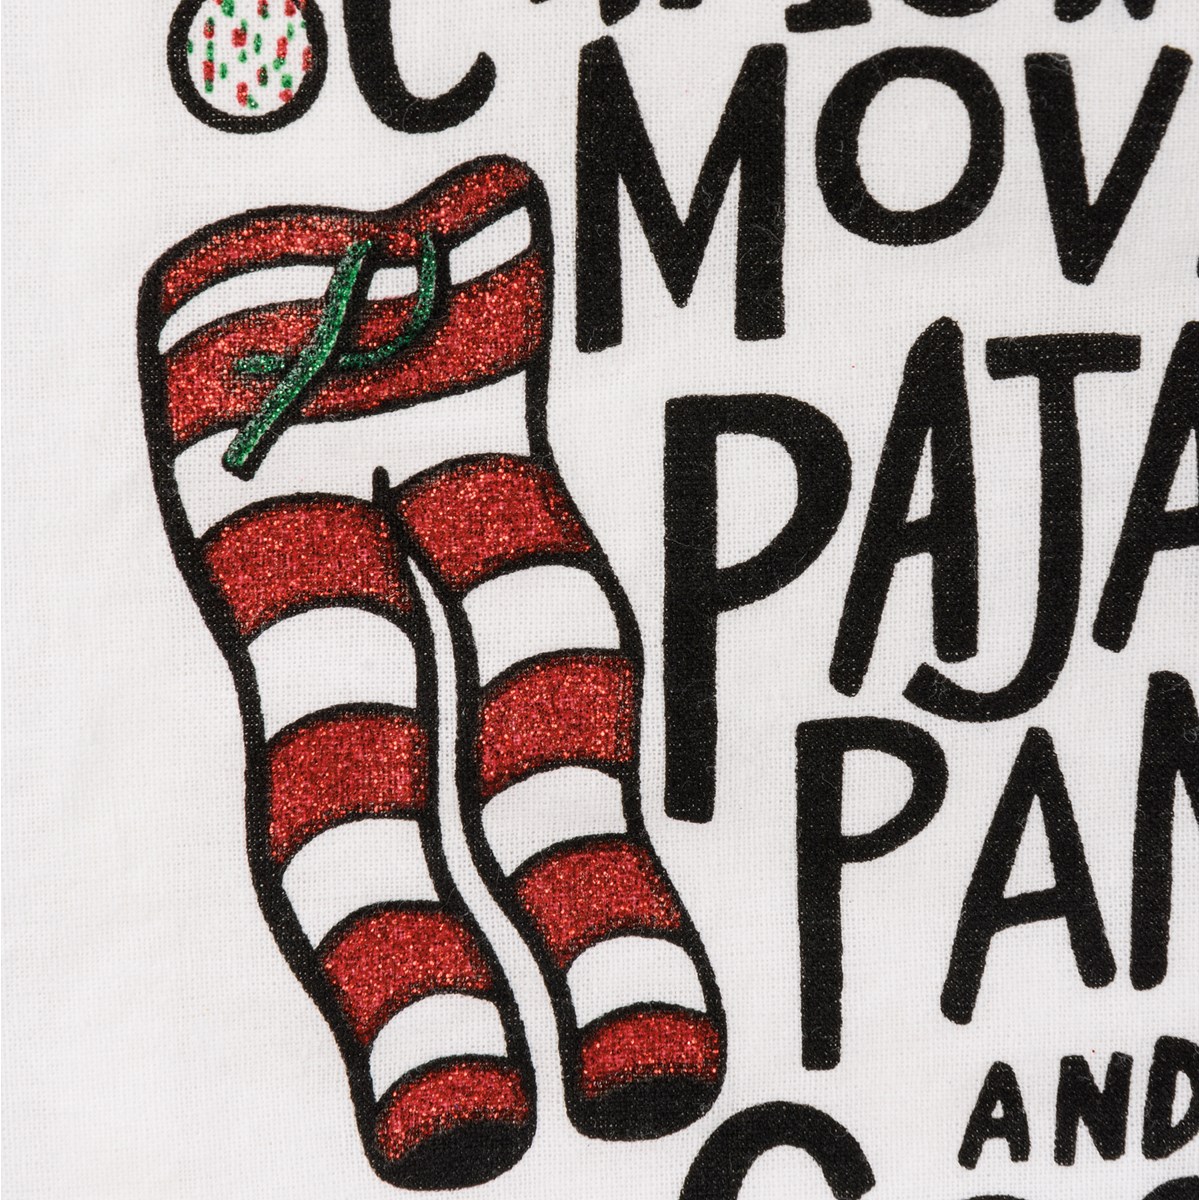 Christmas Movies Pajama Pants Kitchen Towel - Cotton